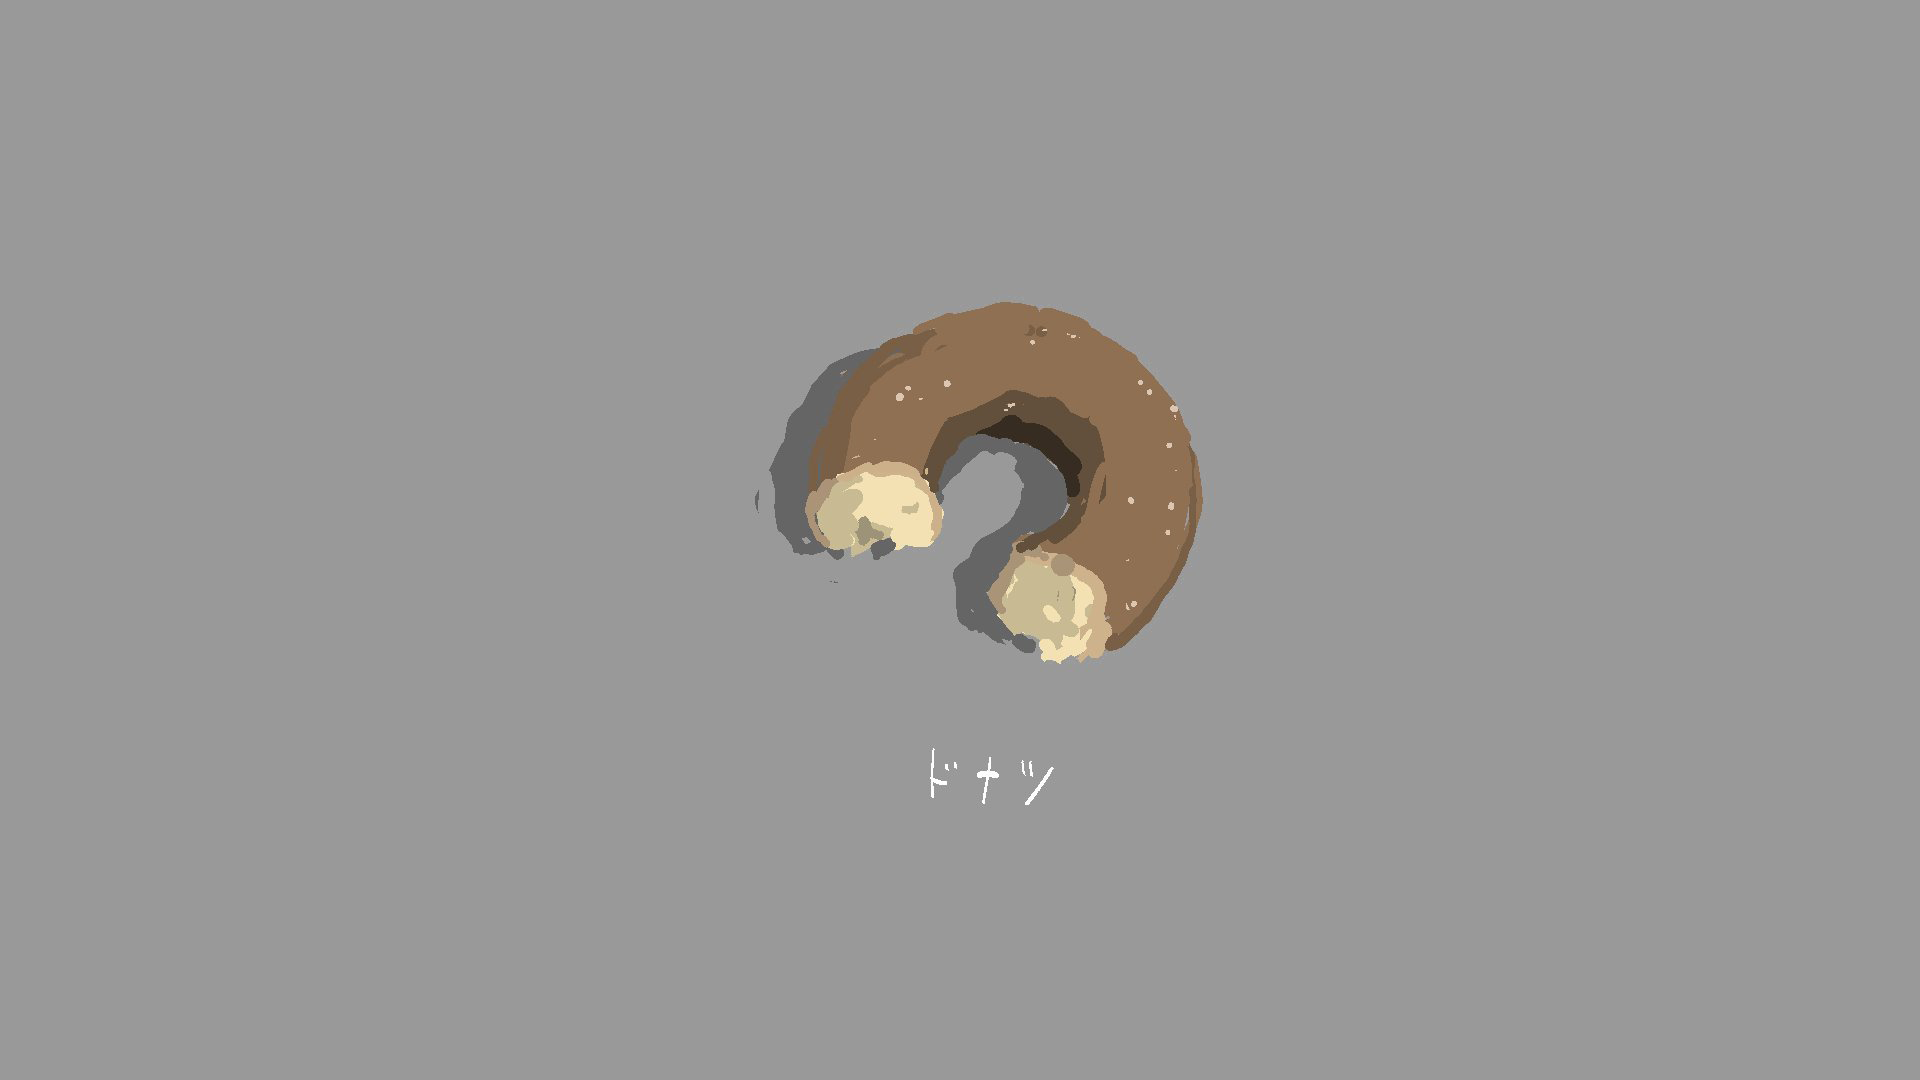 General 1920x1080 minimalism food donut simple background digital art